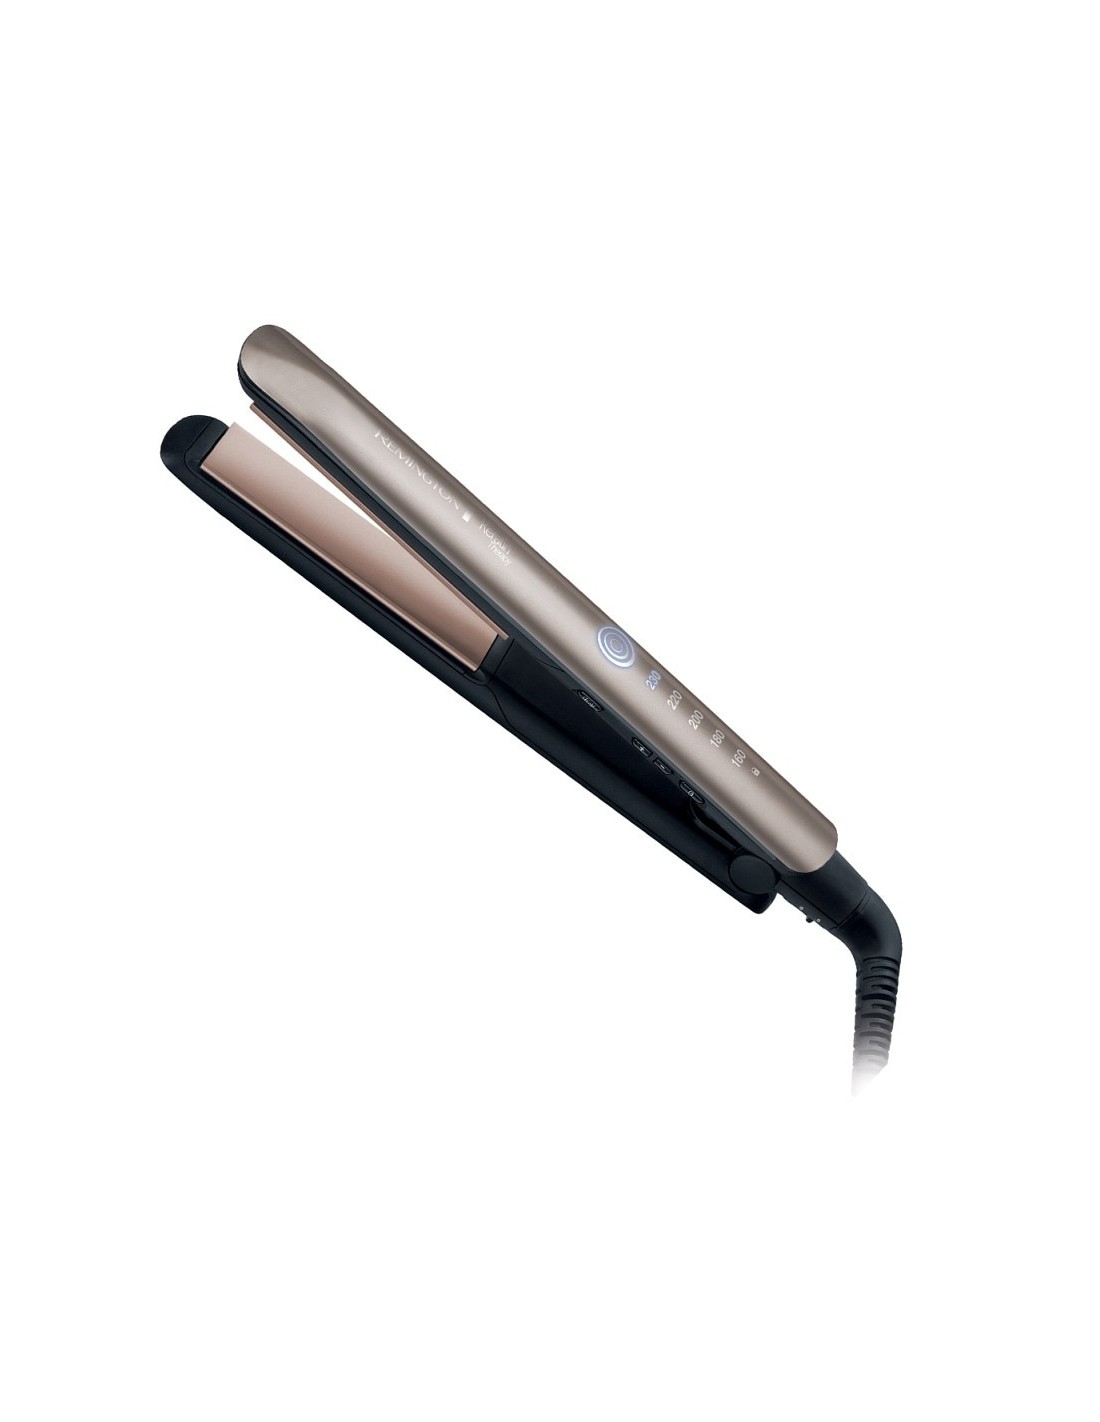 Remington S8590 Keratin Therapy Pro Straightener - Hair Straightener